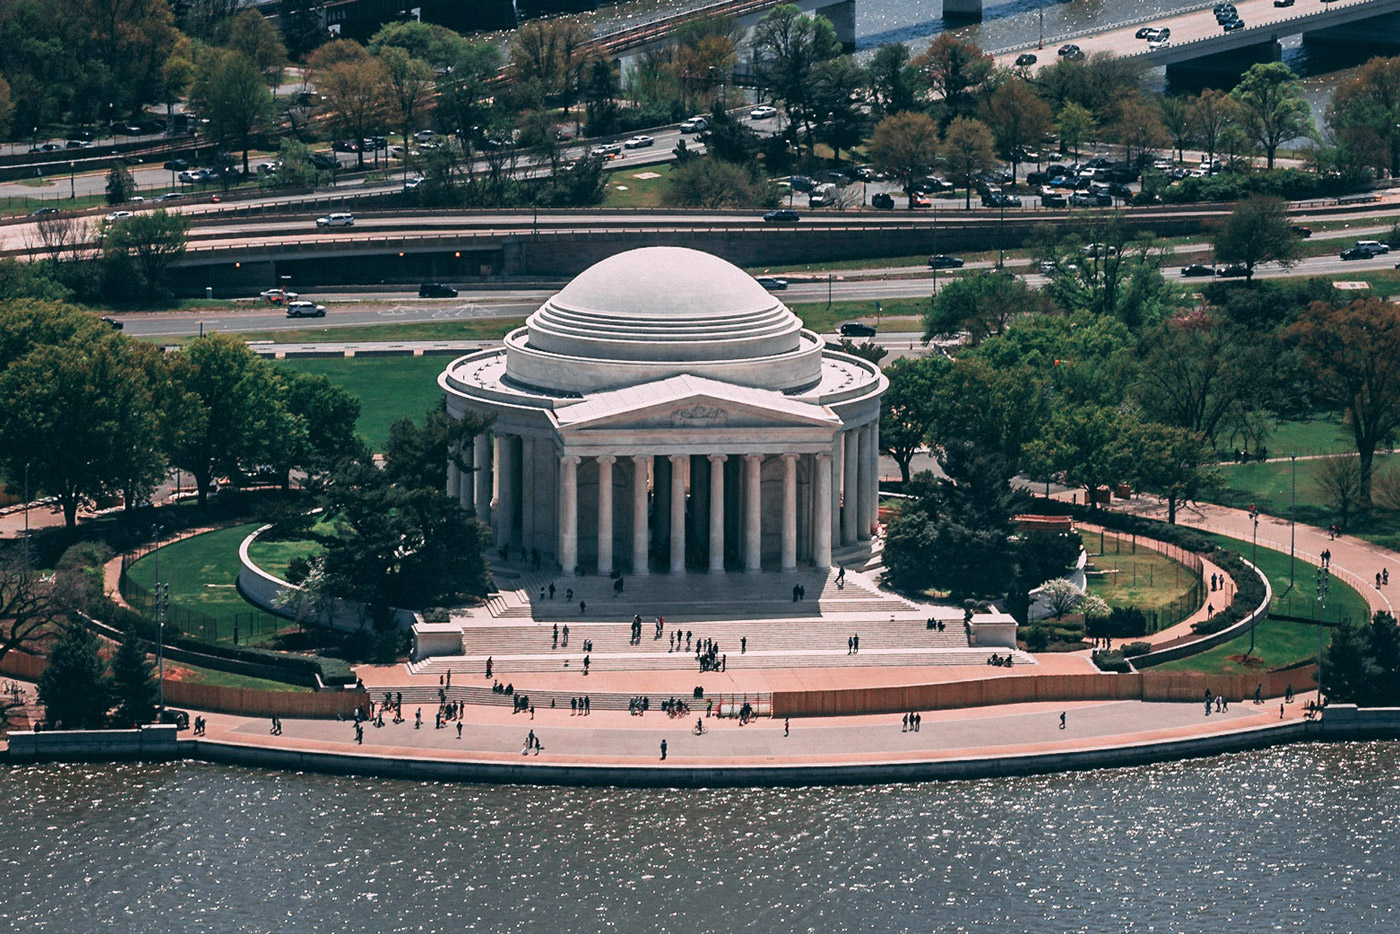 Aerial view of the Thomas Jefferson Memorial facility in Washington, DC.